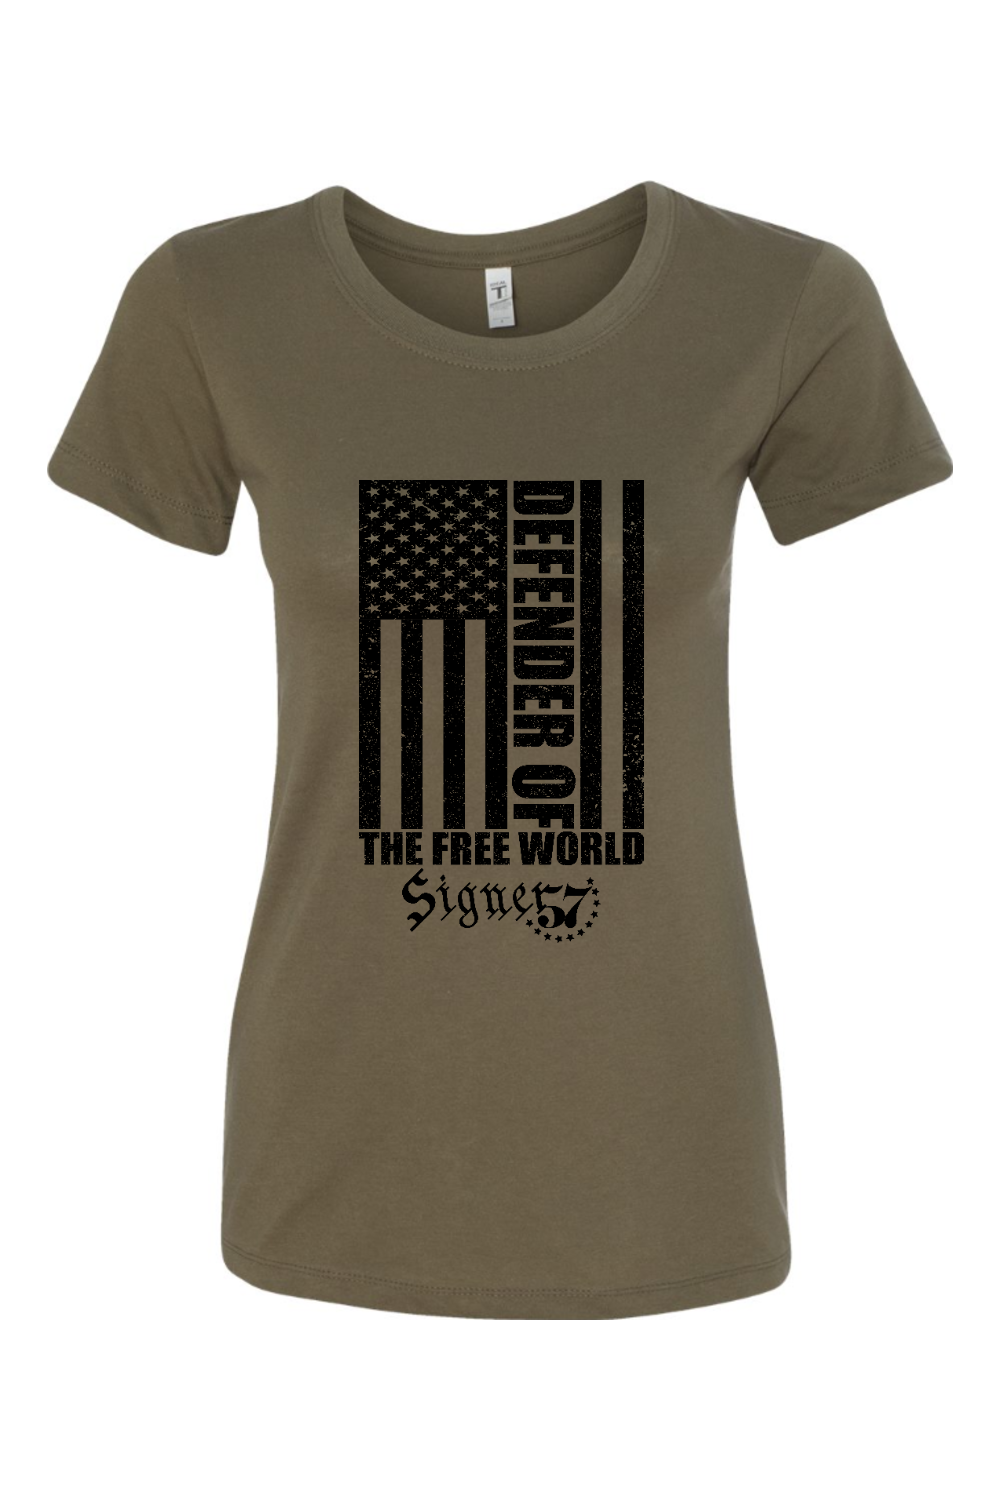 Women's T-Shirt - Defender of the Free World